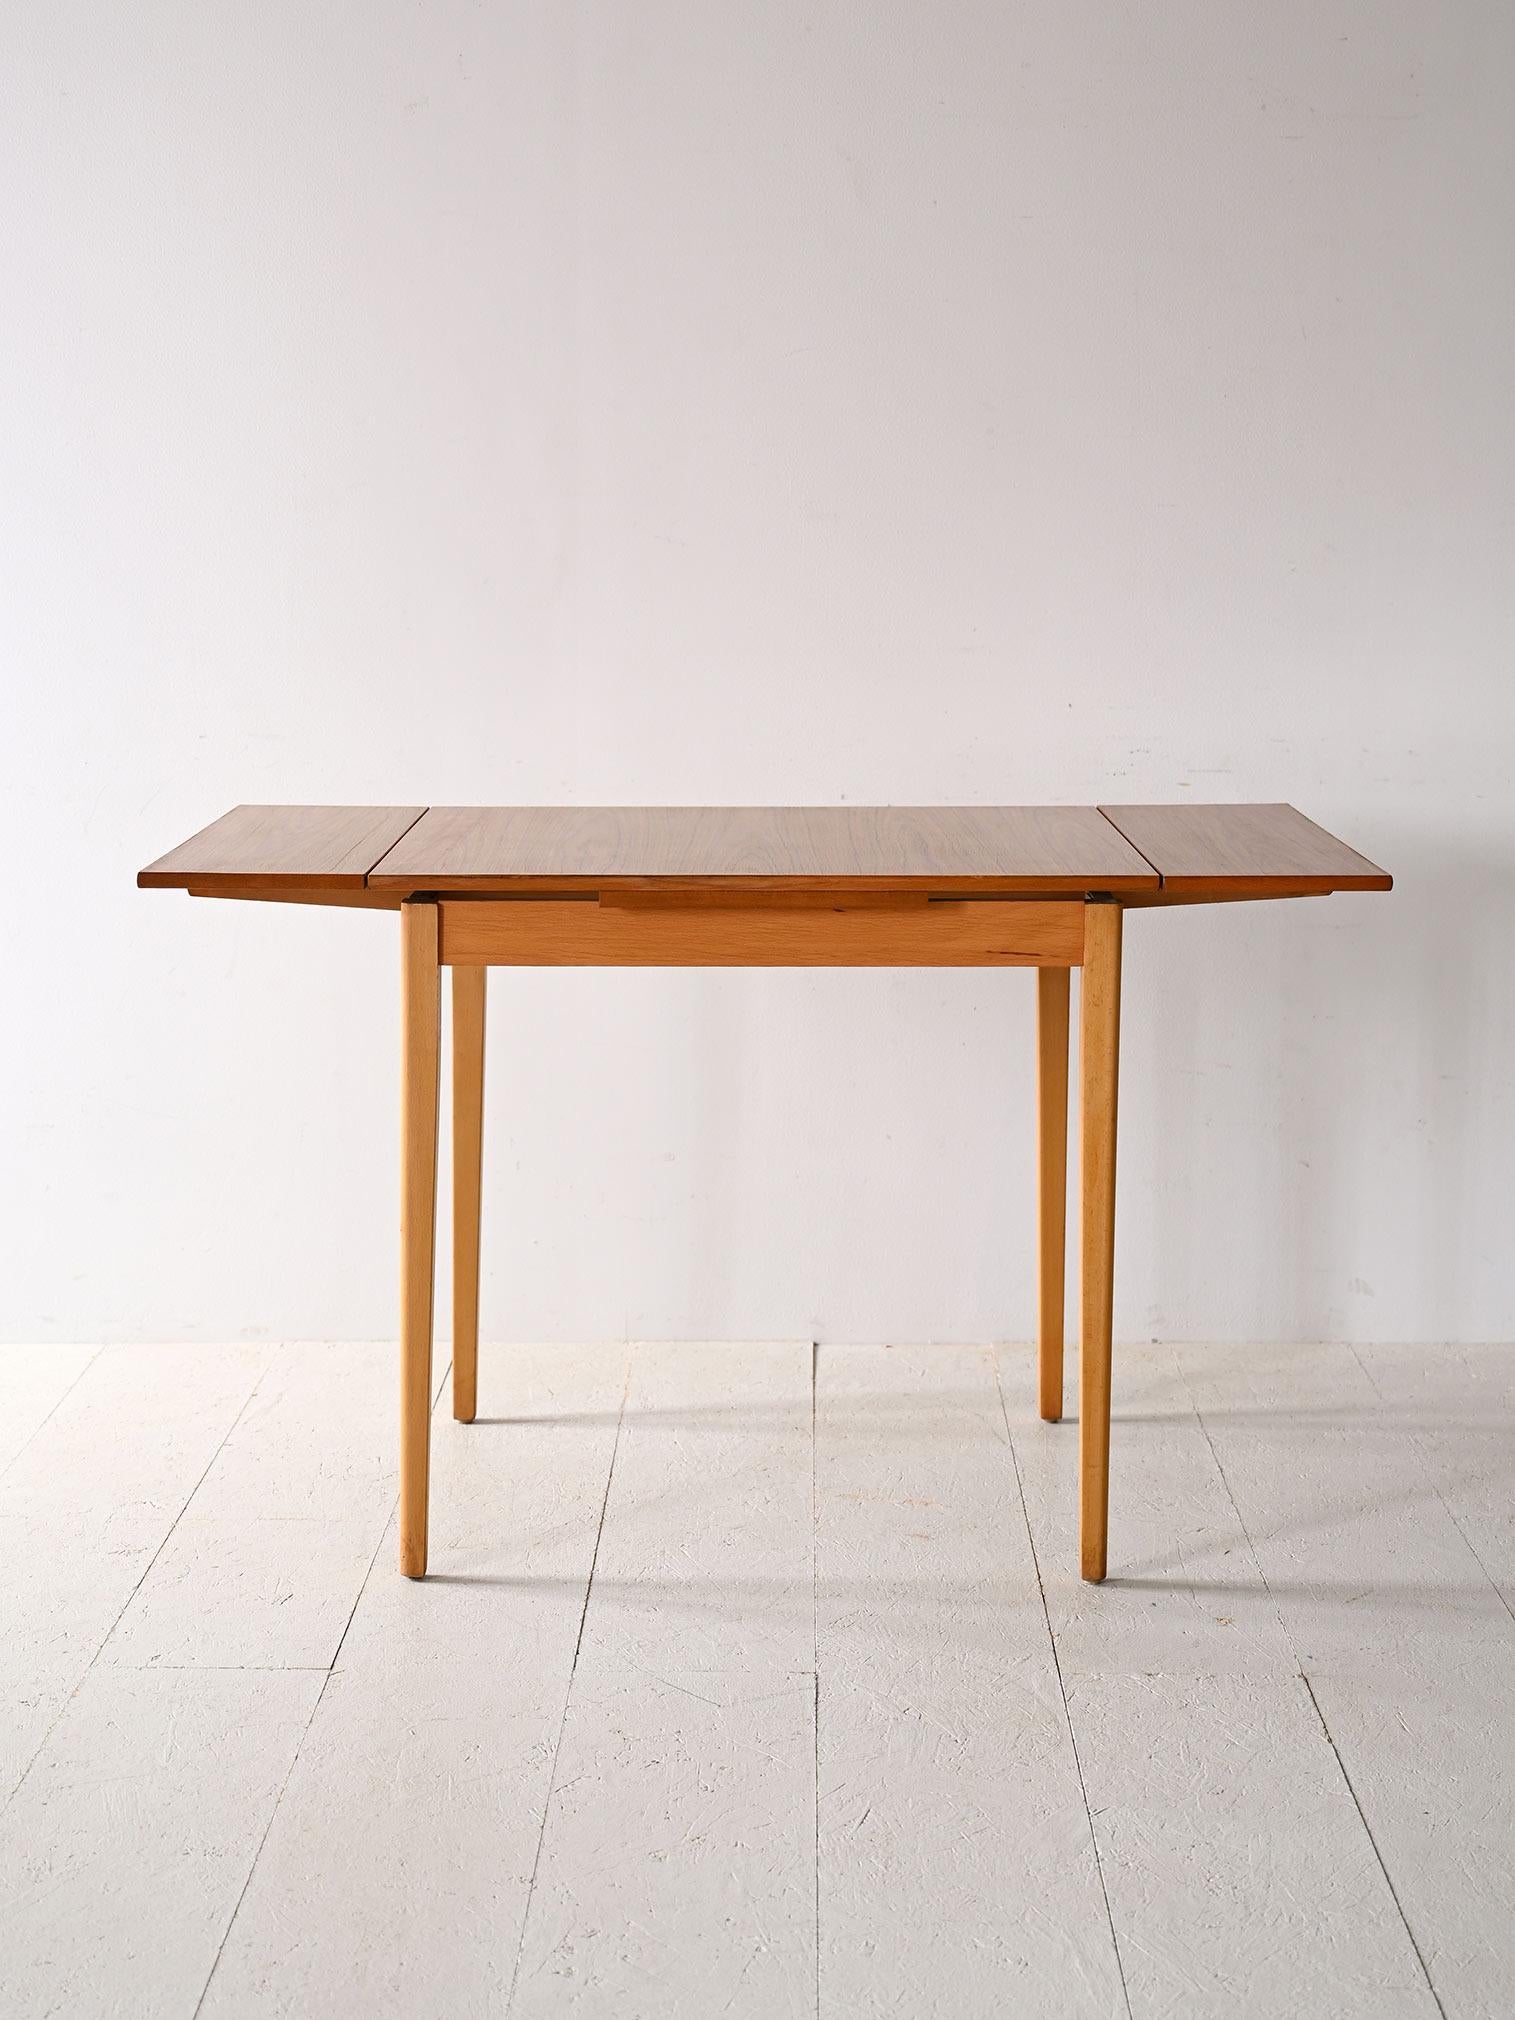 Square extendable table In Good Condition For Sale In Brescia, IT